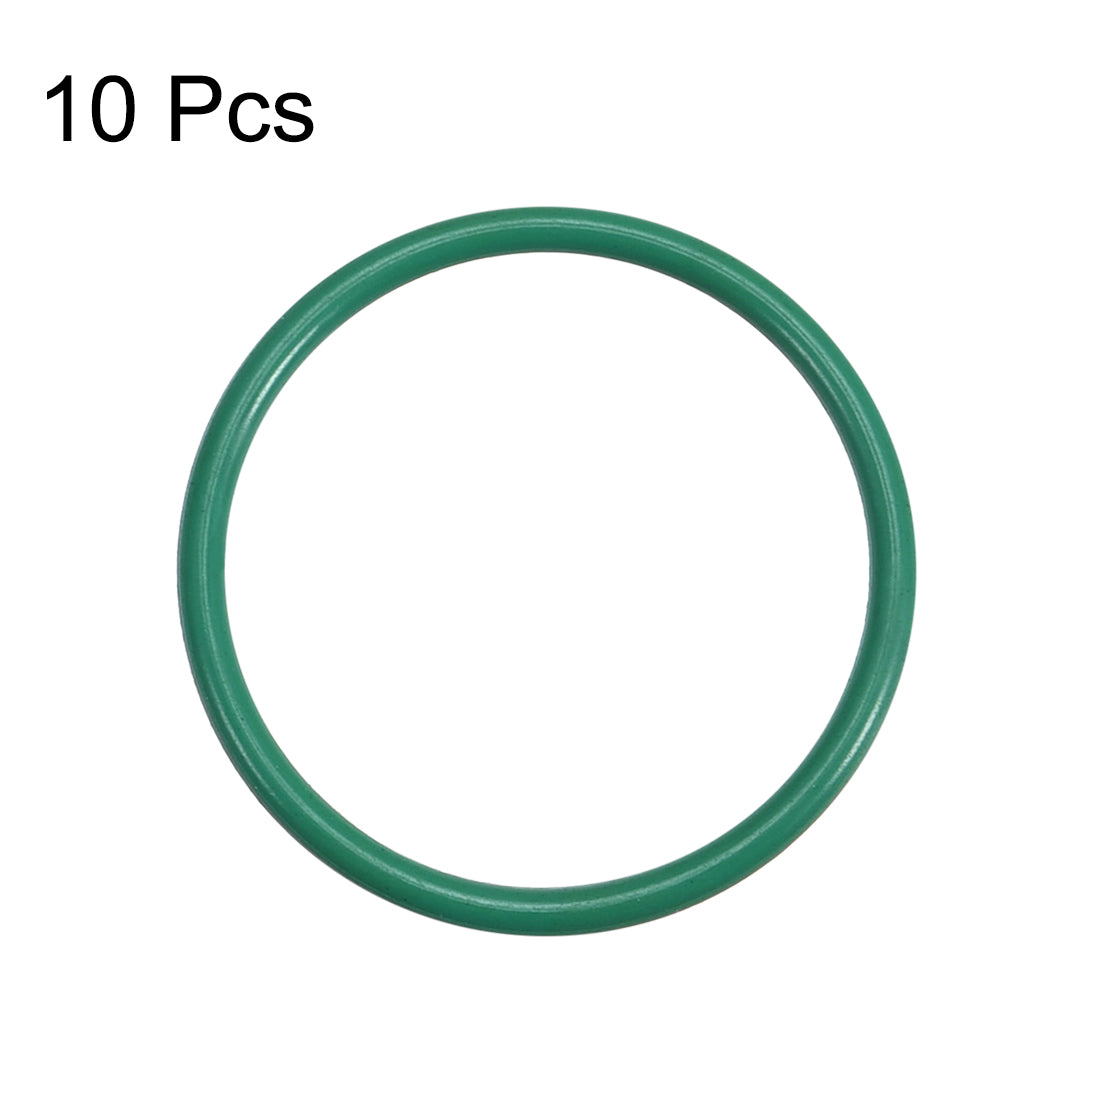 uxcell Uxcell Fluorine Rubber O Rings, 22mm OD, 19mm Inner Diameter, 1.5mm Width, Seal Gasket Green 10Pcs